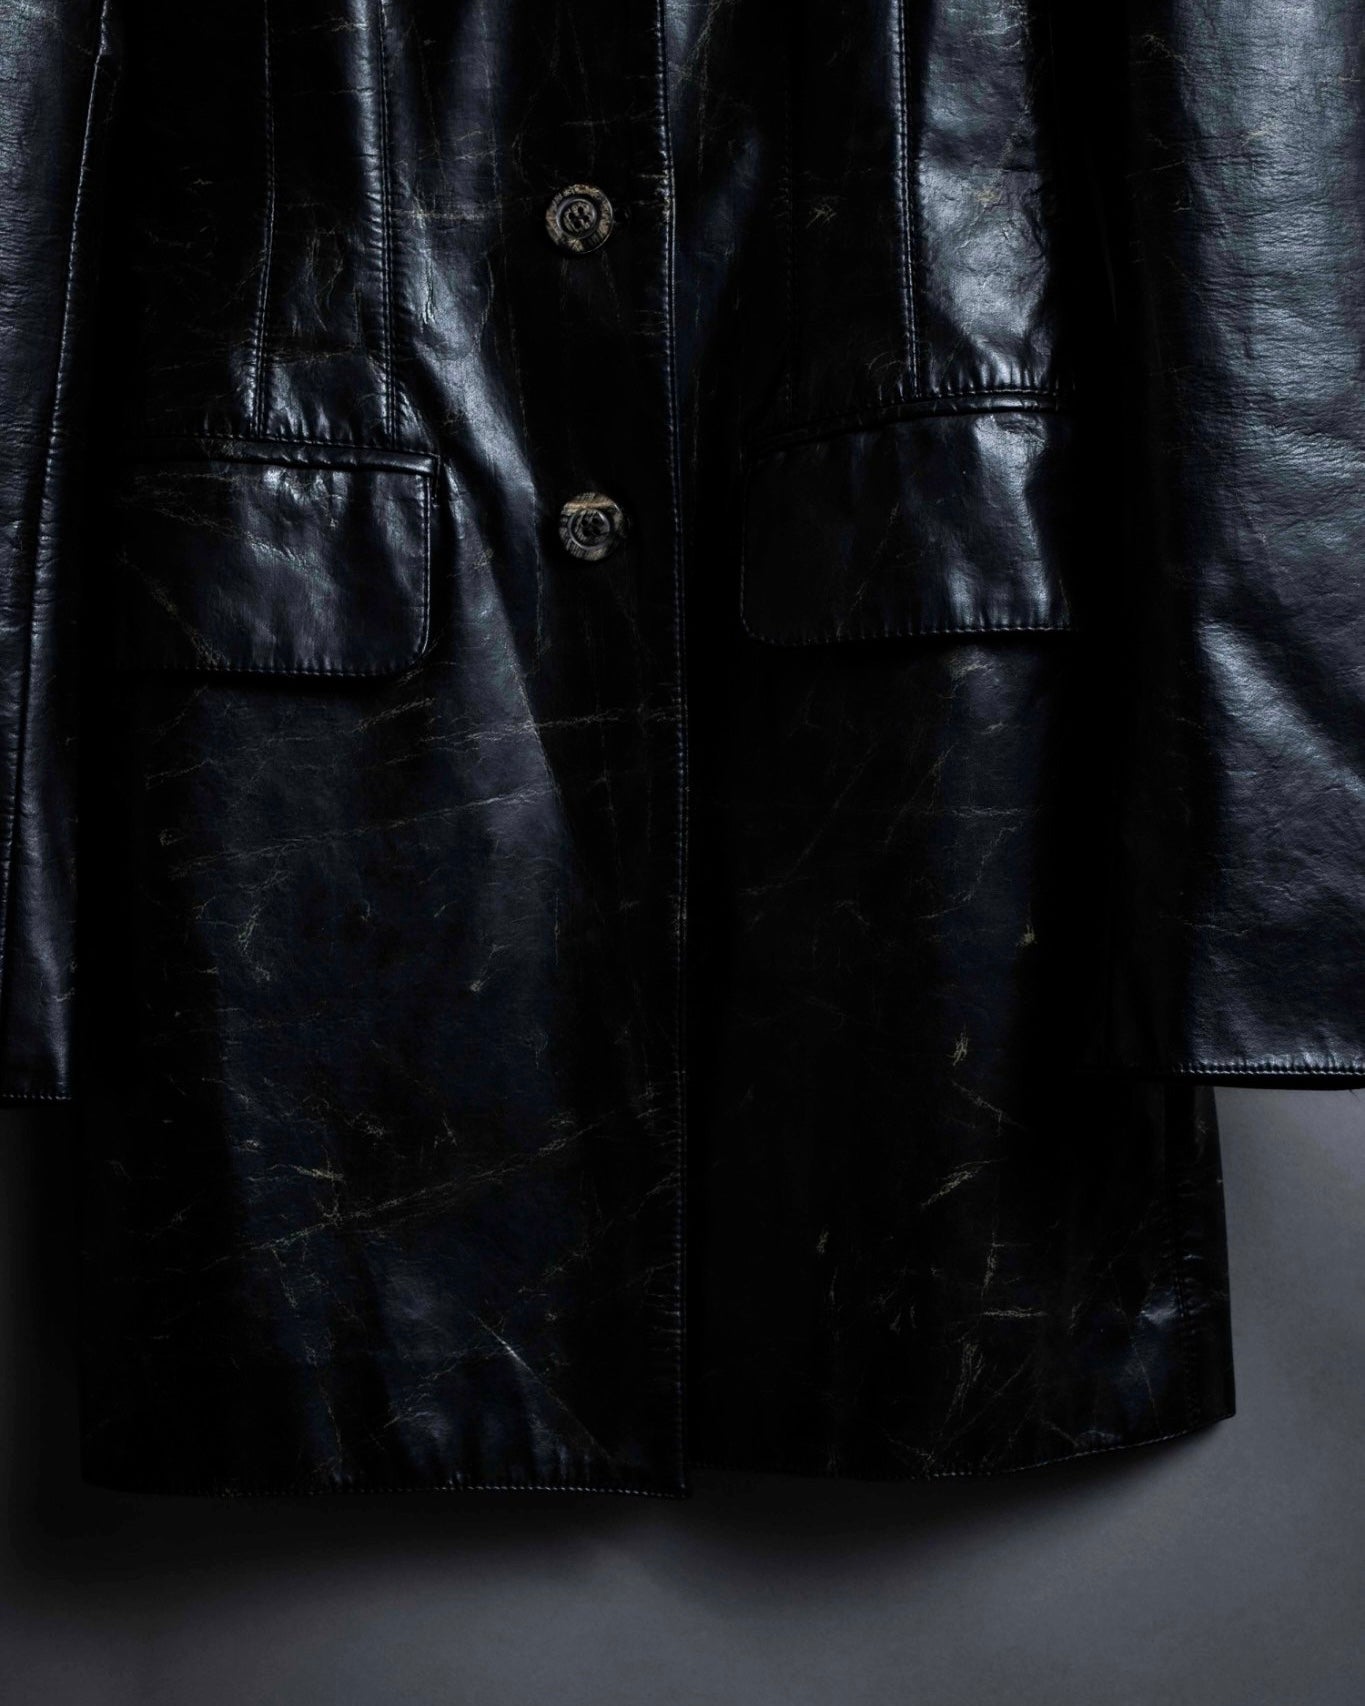 "STEFANO MORTARI" Archive leather crack design jacket